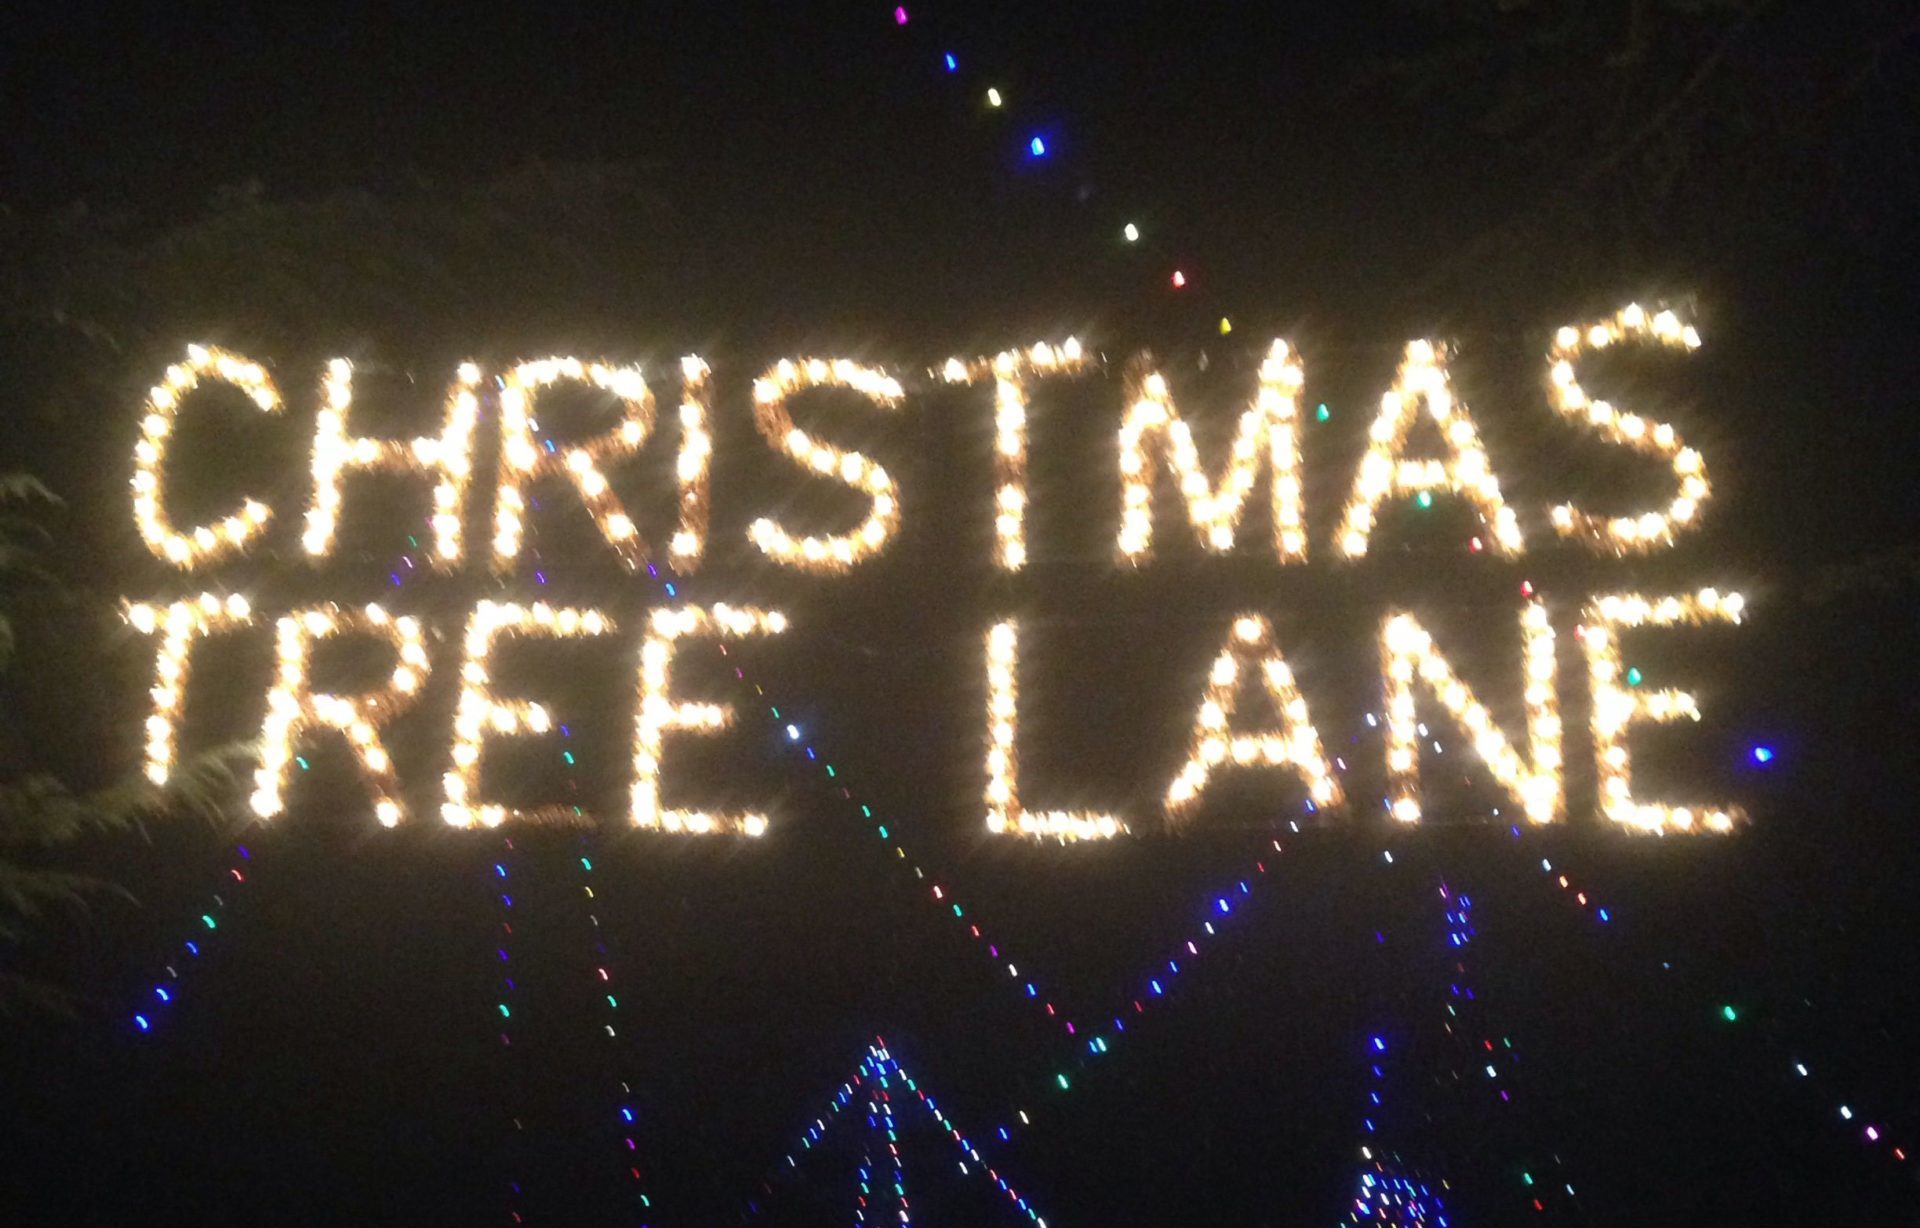 Christmas Tree Lane opens Wednesday, December 1